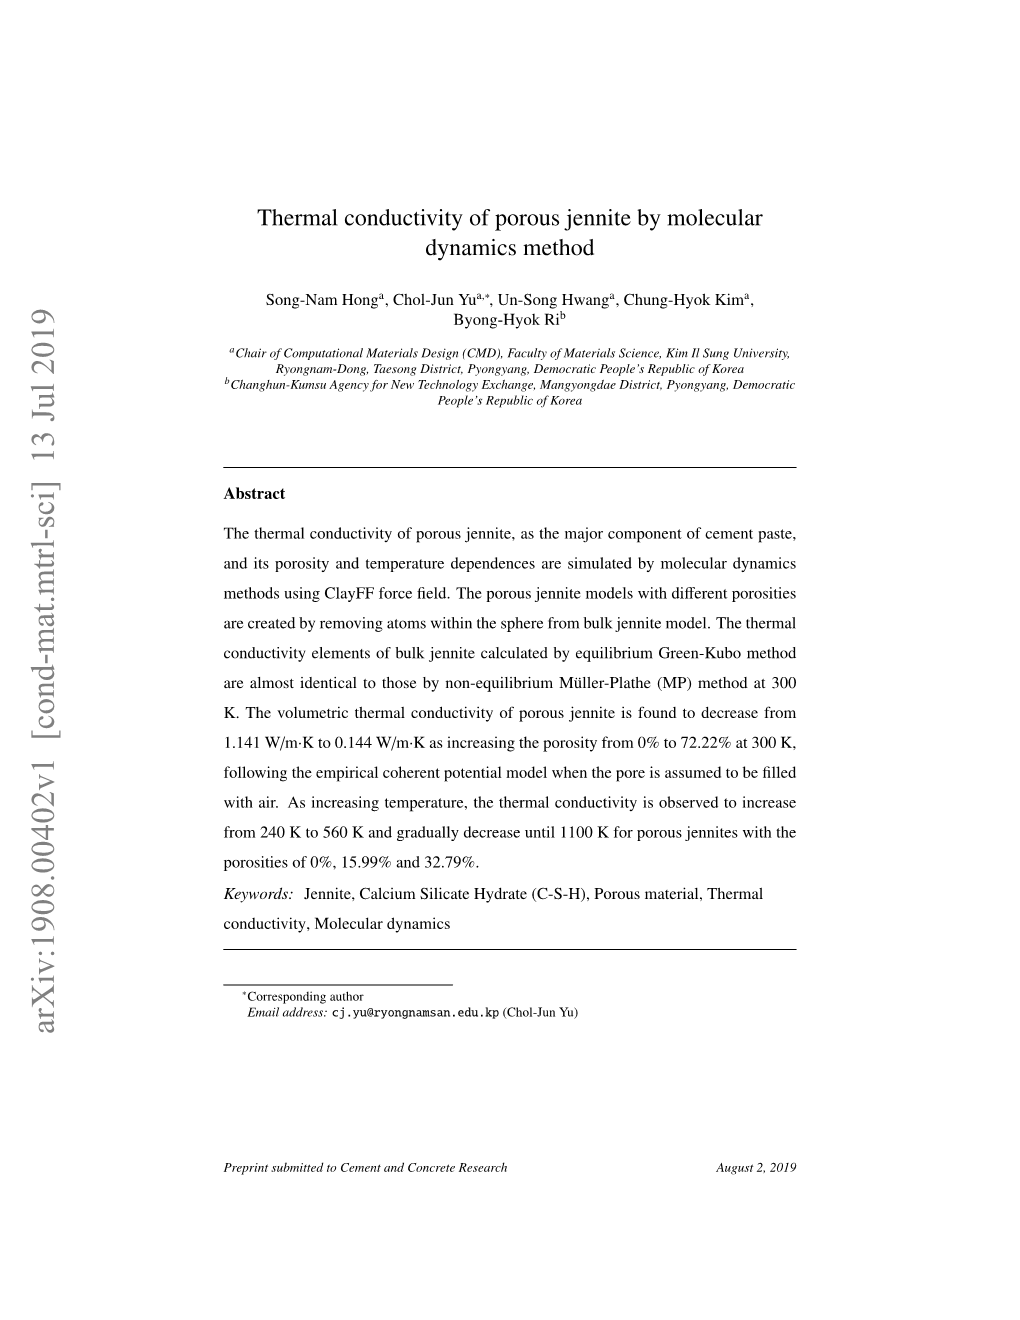 Thermal Conductivity of Porous Jennite by Molecular Dynamics Method